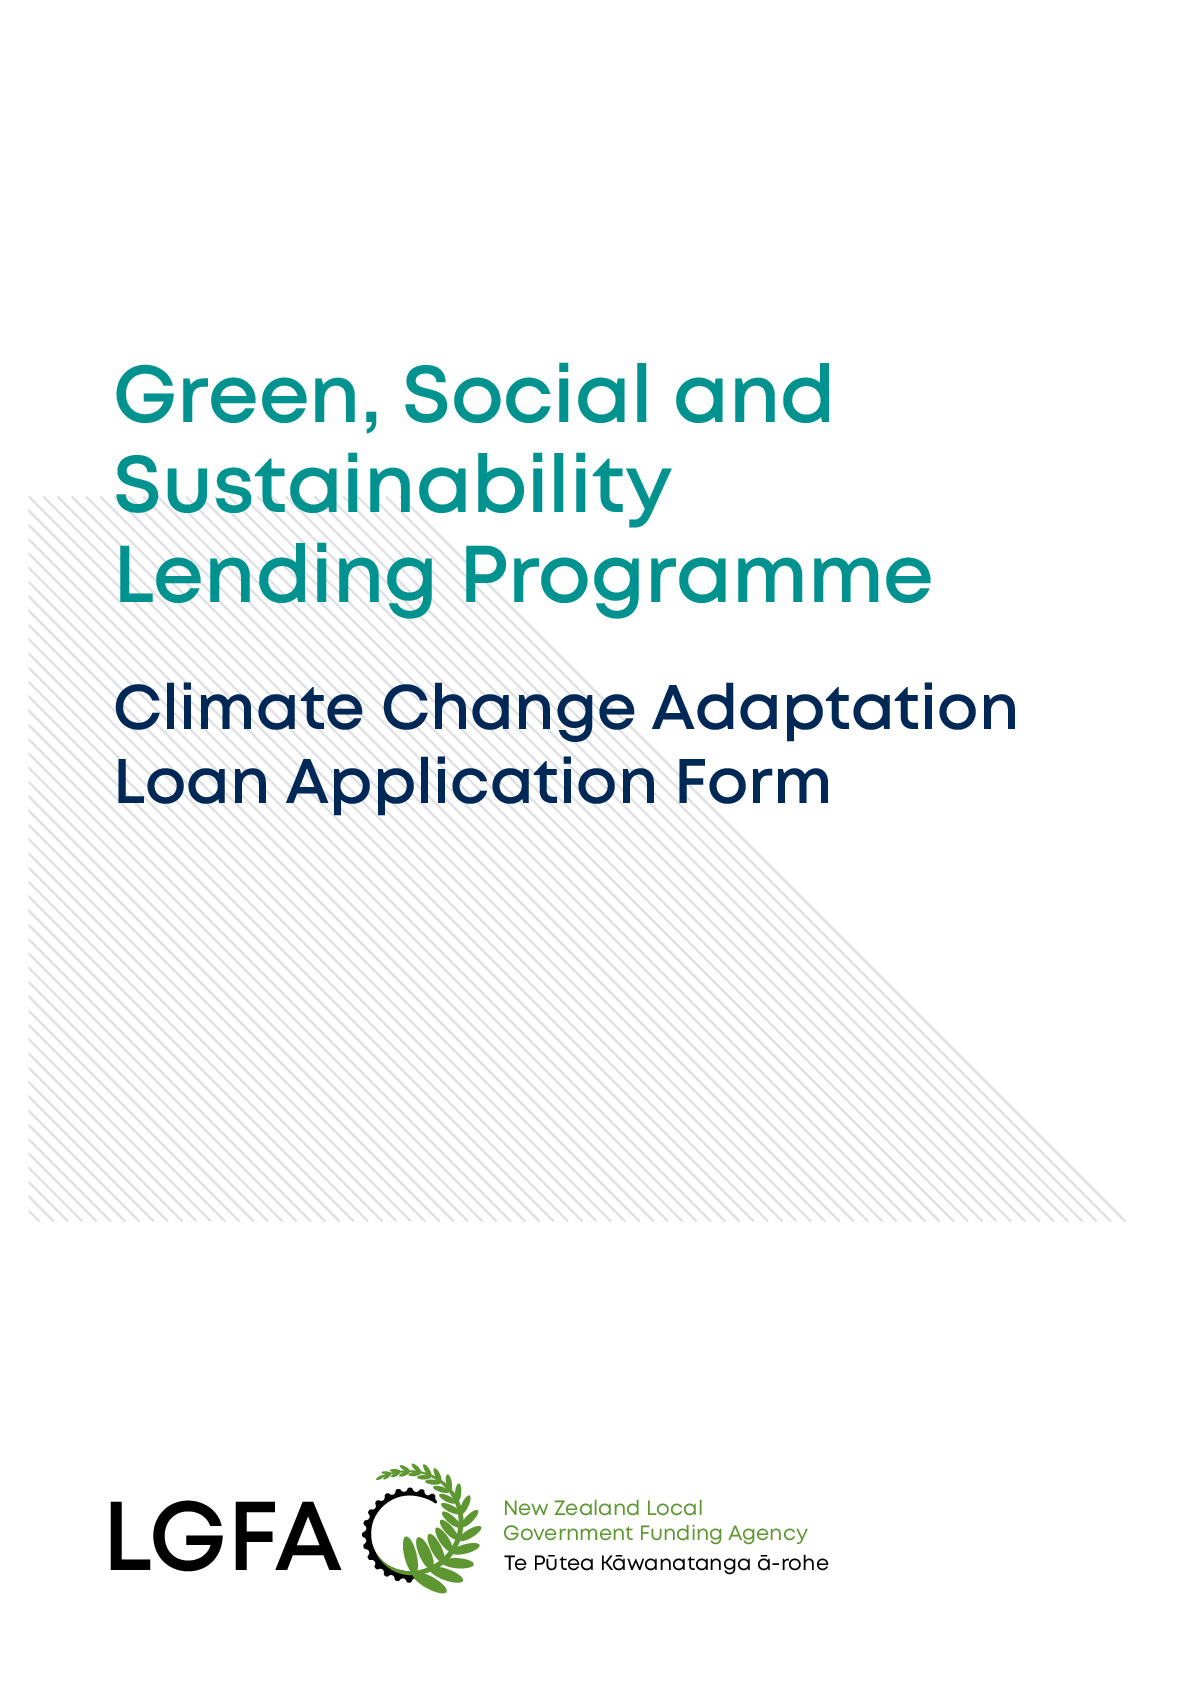 Climate Change Adaptation Loan Application Form 30092021 FINAL